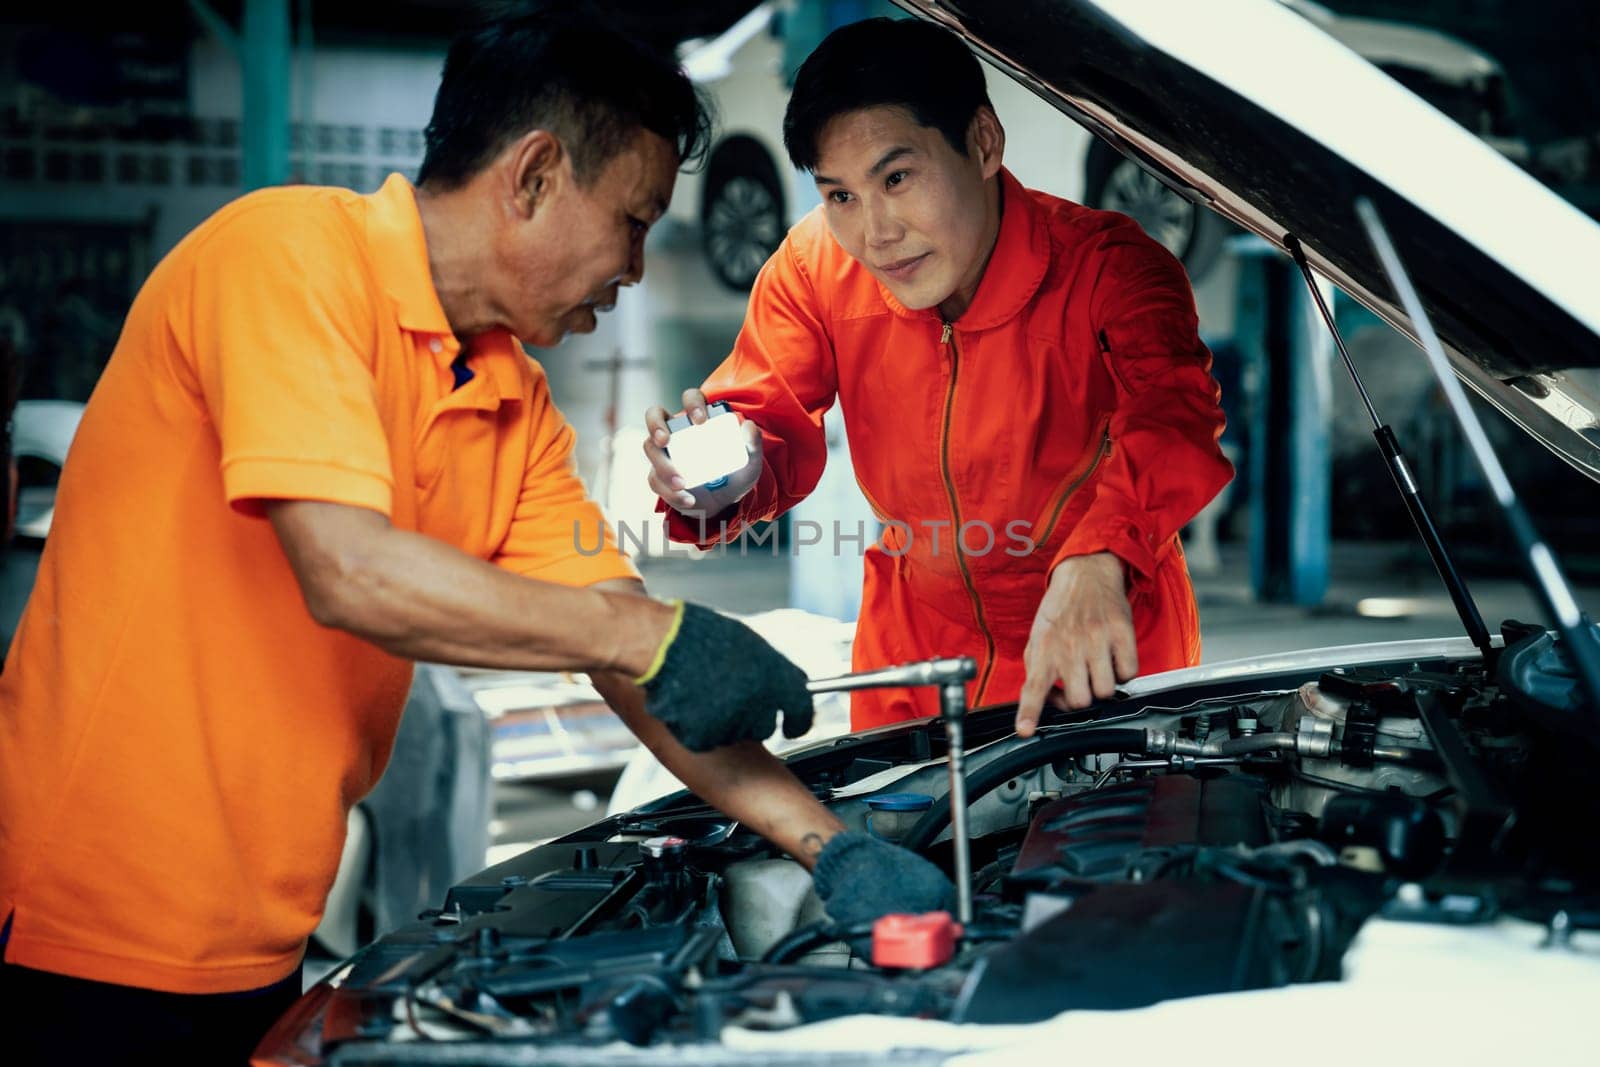 Automotive service mechanic inspect and diagnose car engine. Oxus by biancoblue